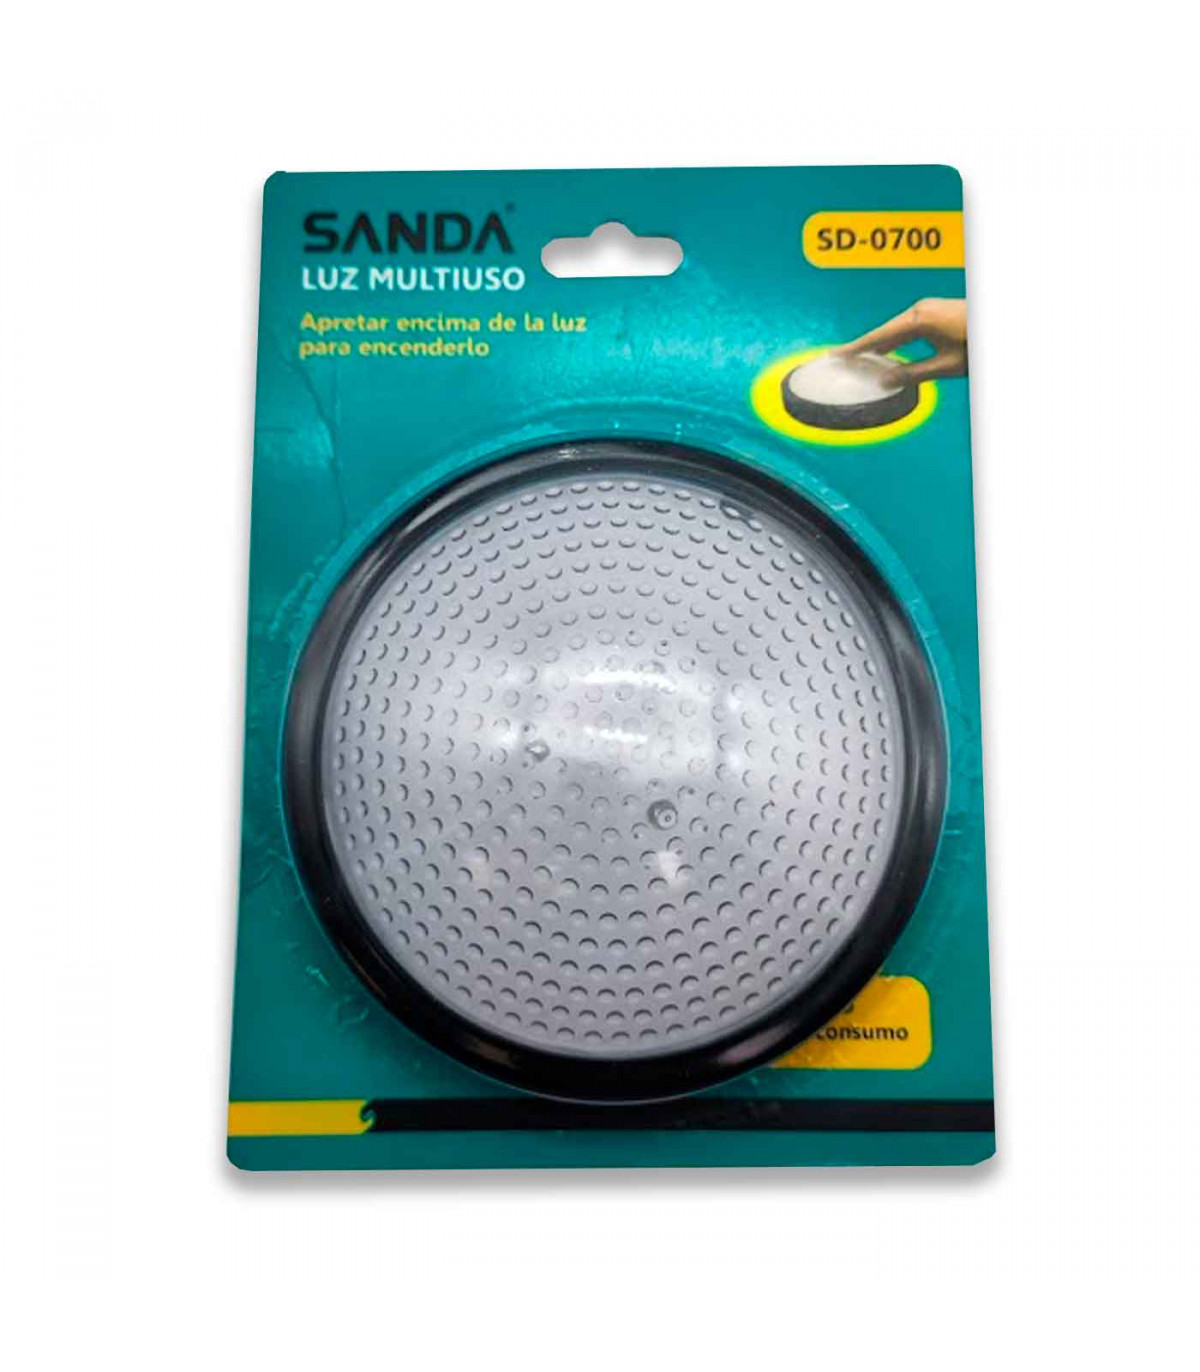 Lámpara LED portátil multiusos, pilas no incluidas, apretar luz para  encender, adaptable a cualquier superficie, diámetro de 13